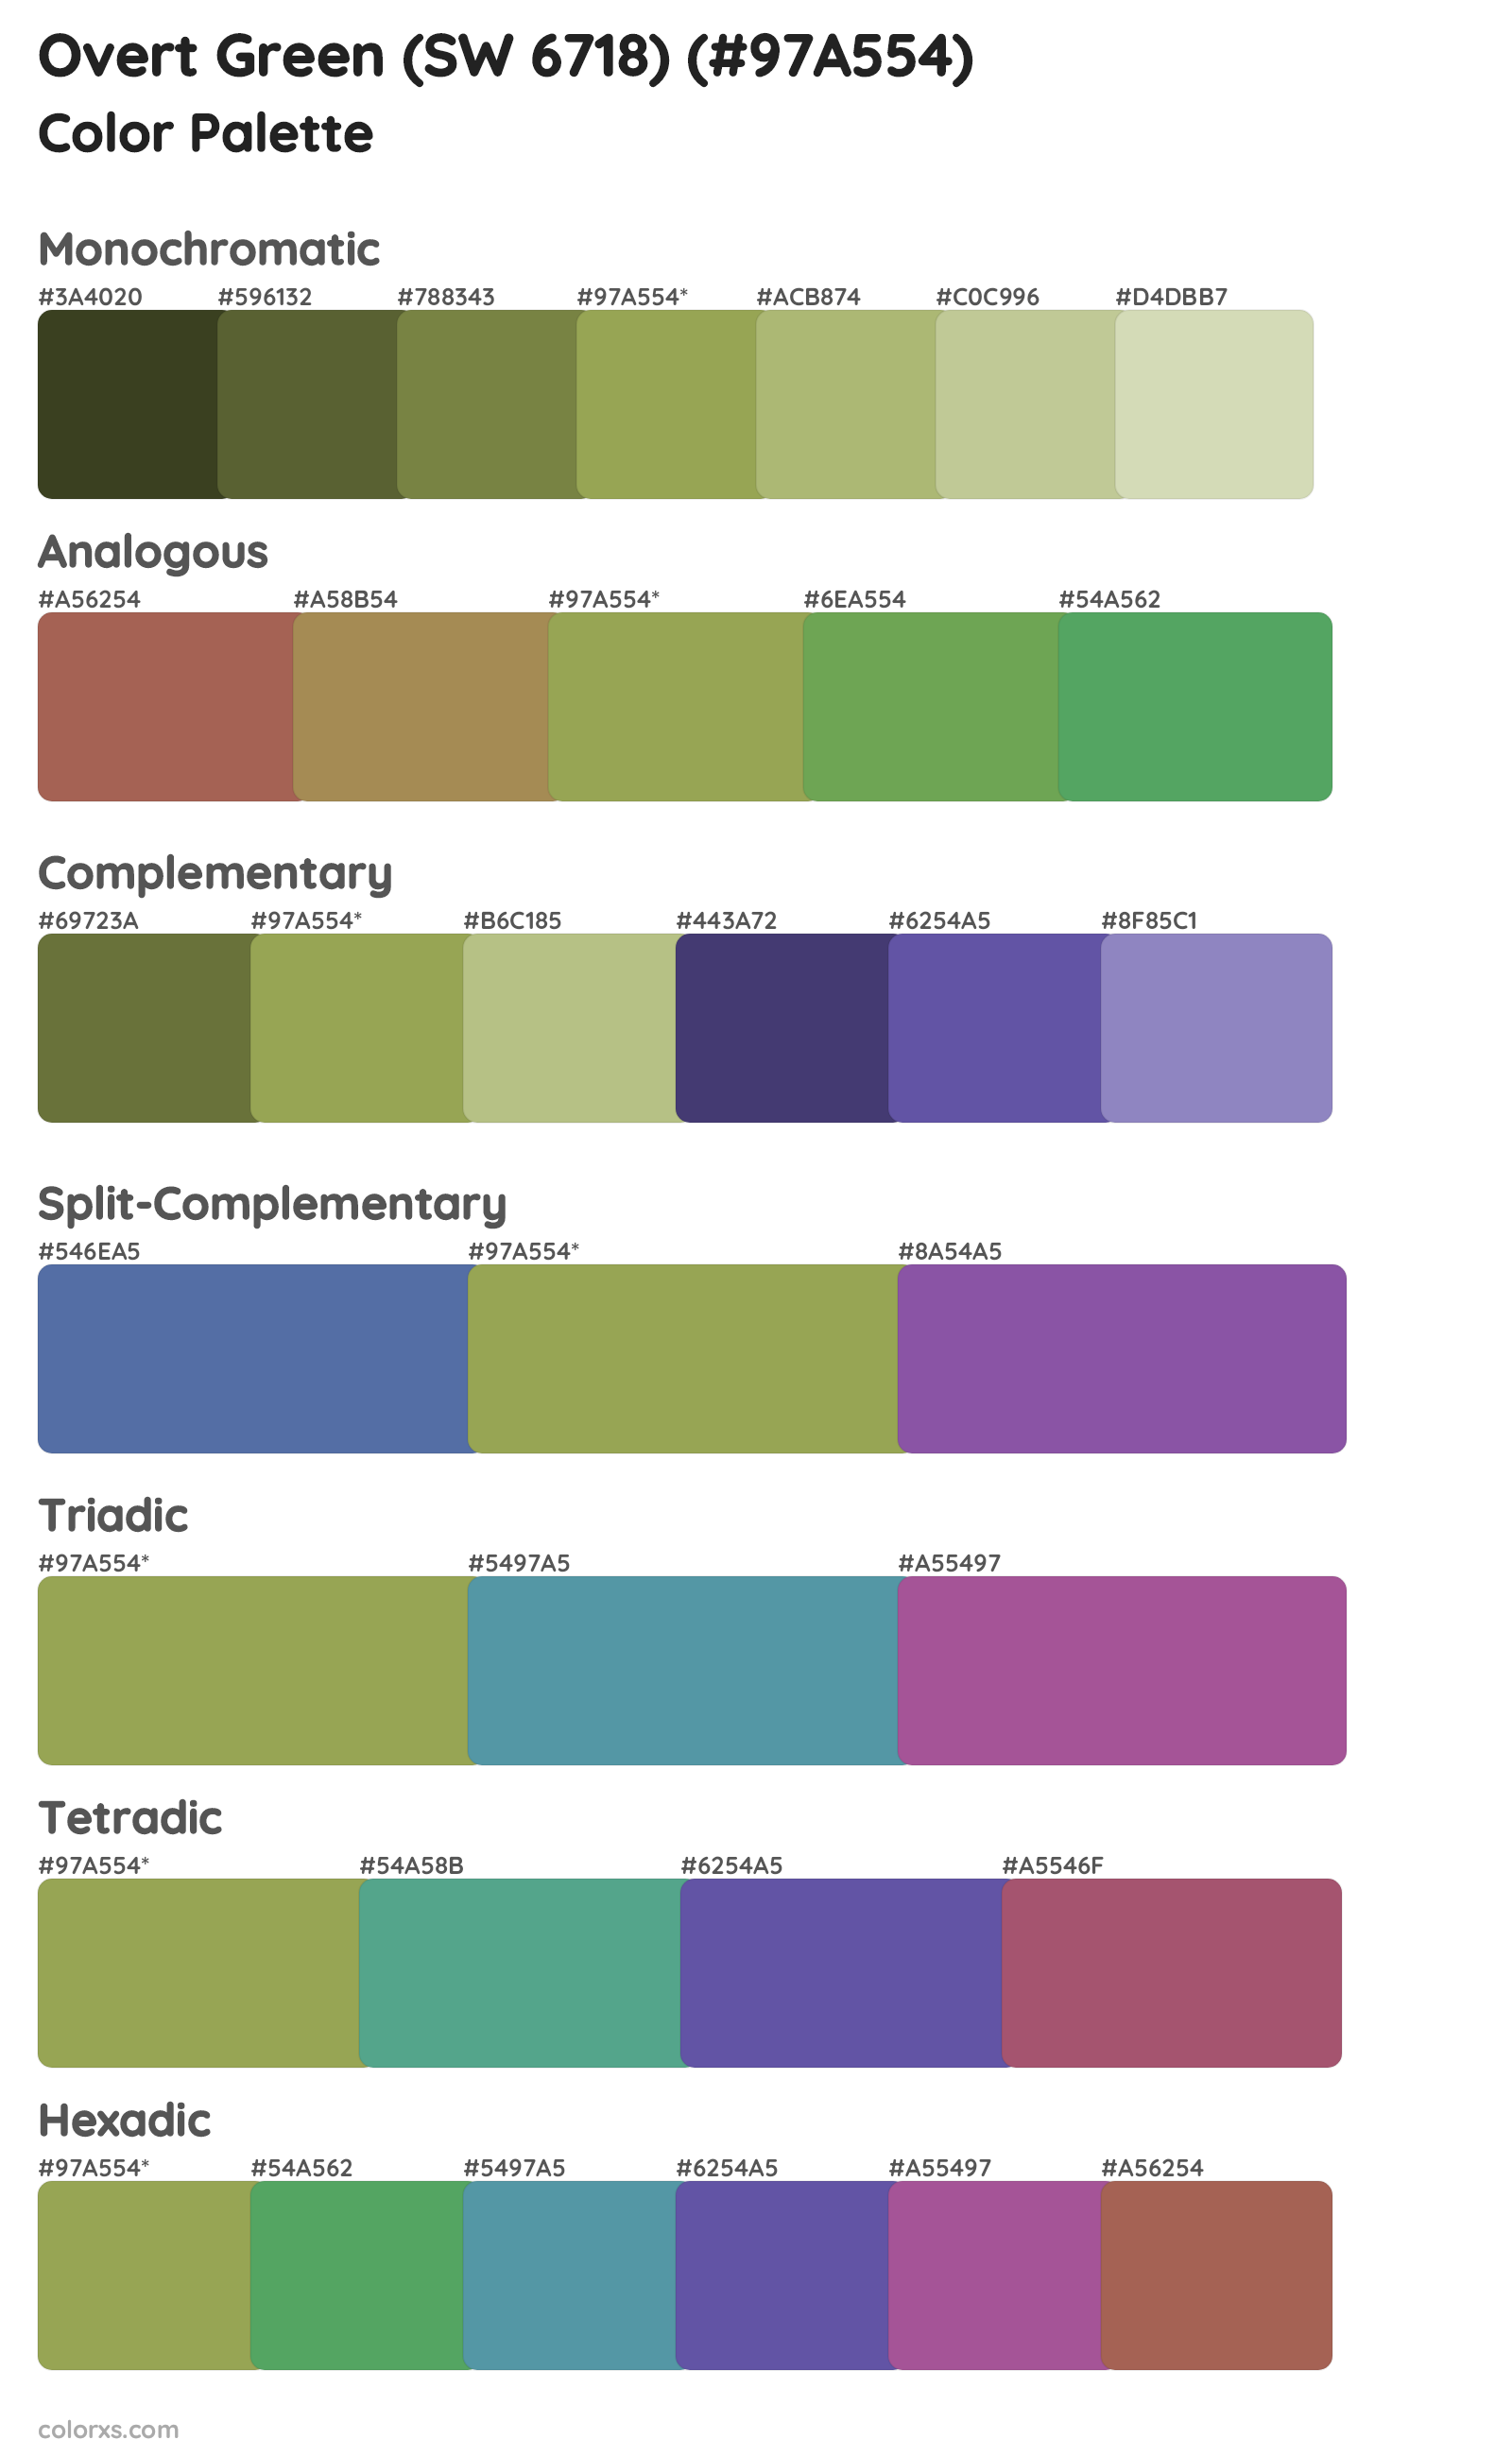 Overt Green (SW 6718) Color Scheme Palettes